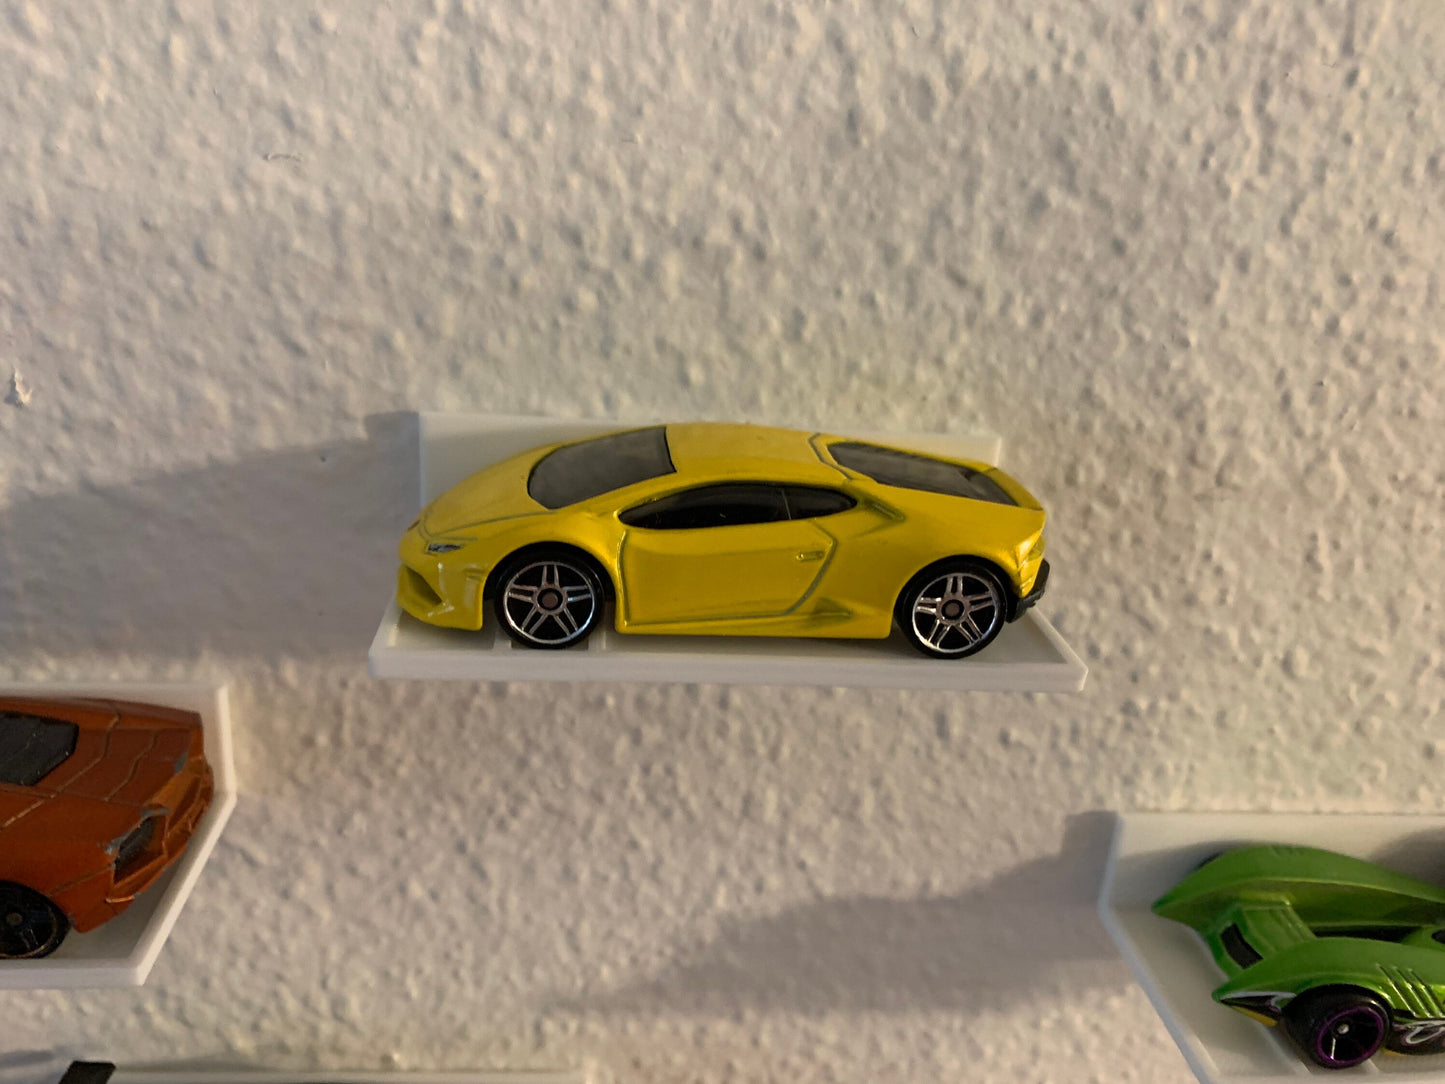 Model Car Wall Mount